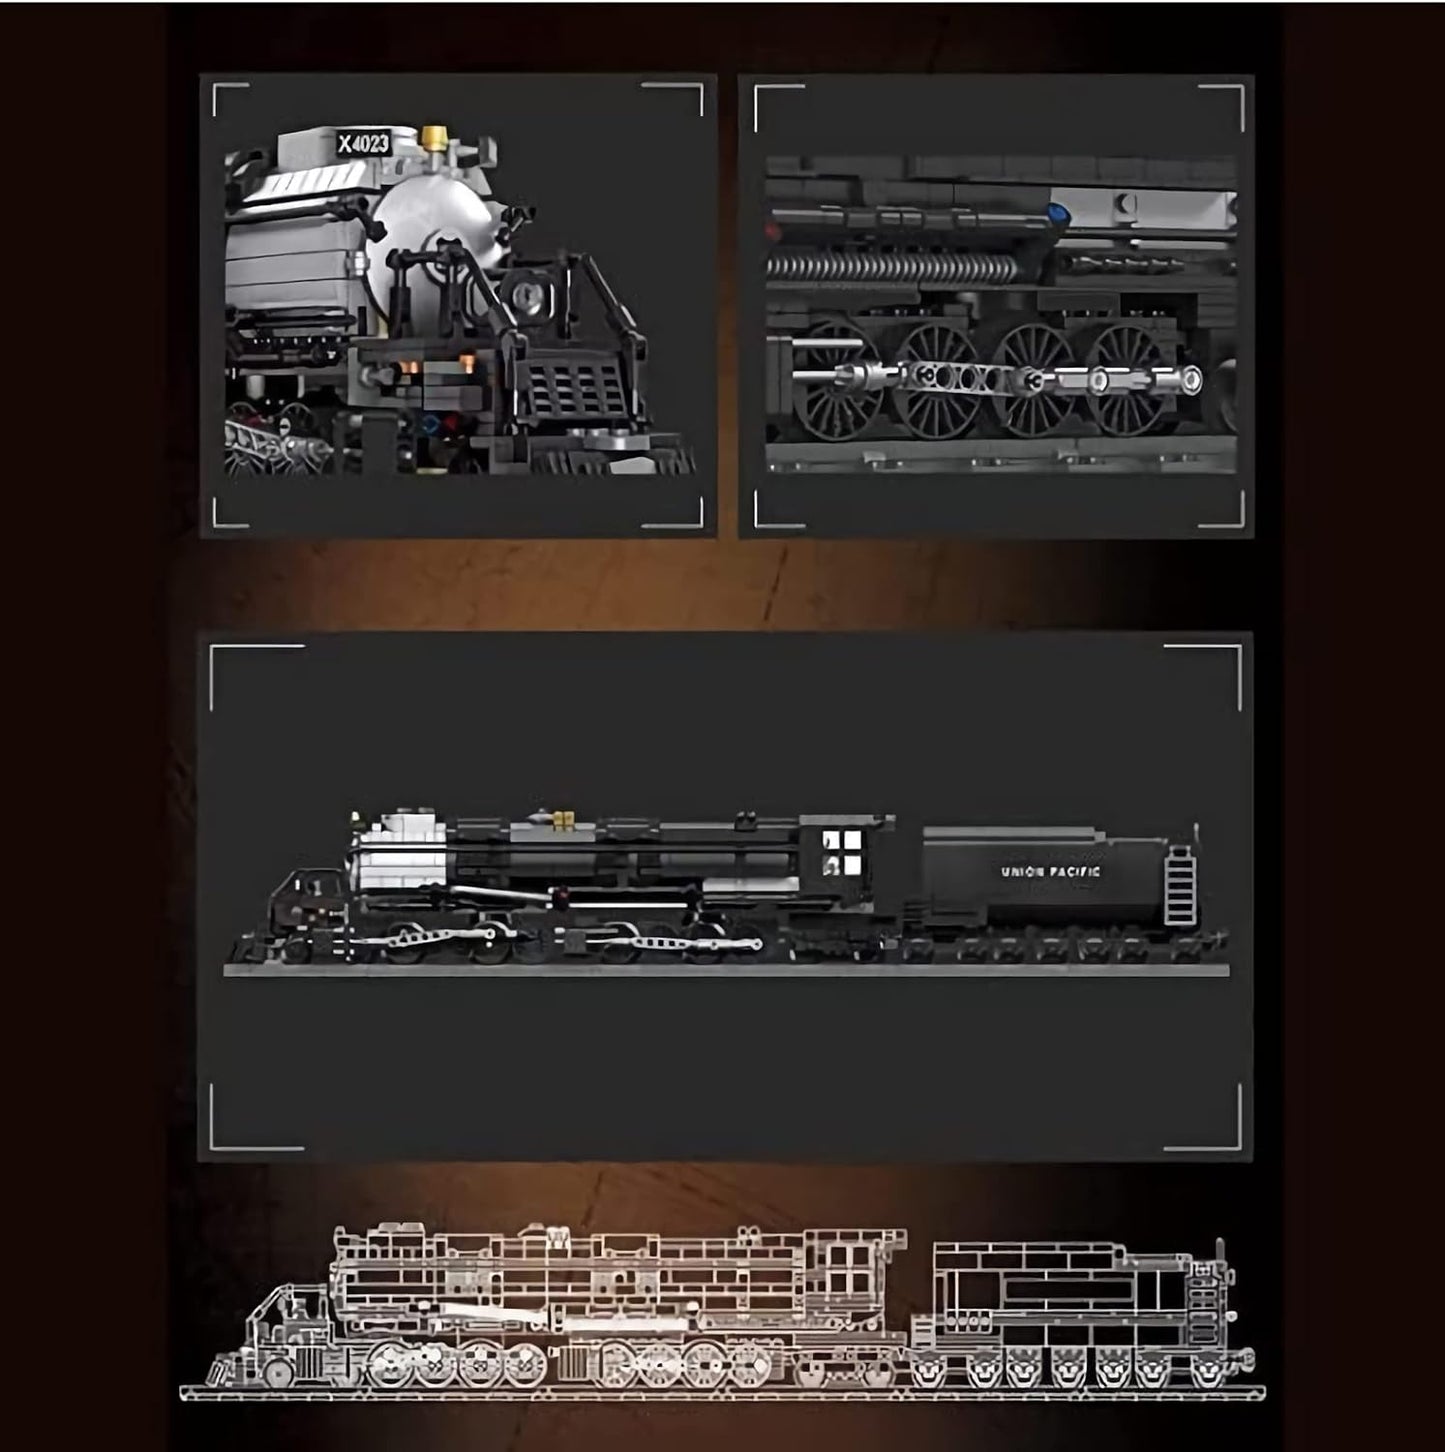 Technic Big Boy Locomotive Model Kit, 1608 Pieces Steam Train Building Set for Kids Adult, Compatible with Lego Technic